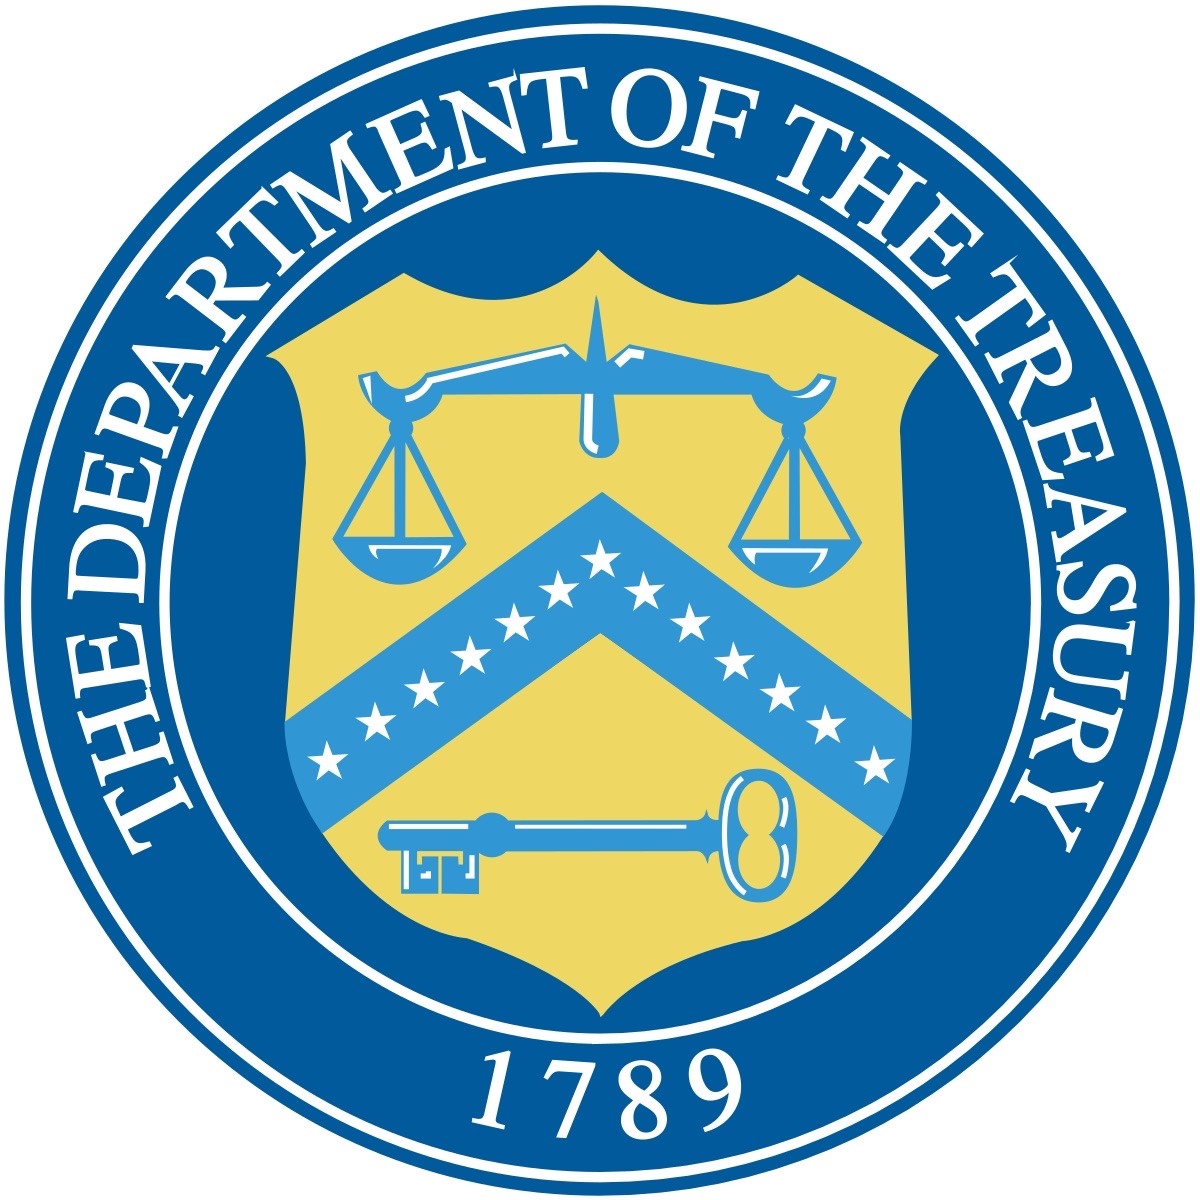 The Department of Treasury logo